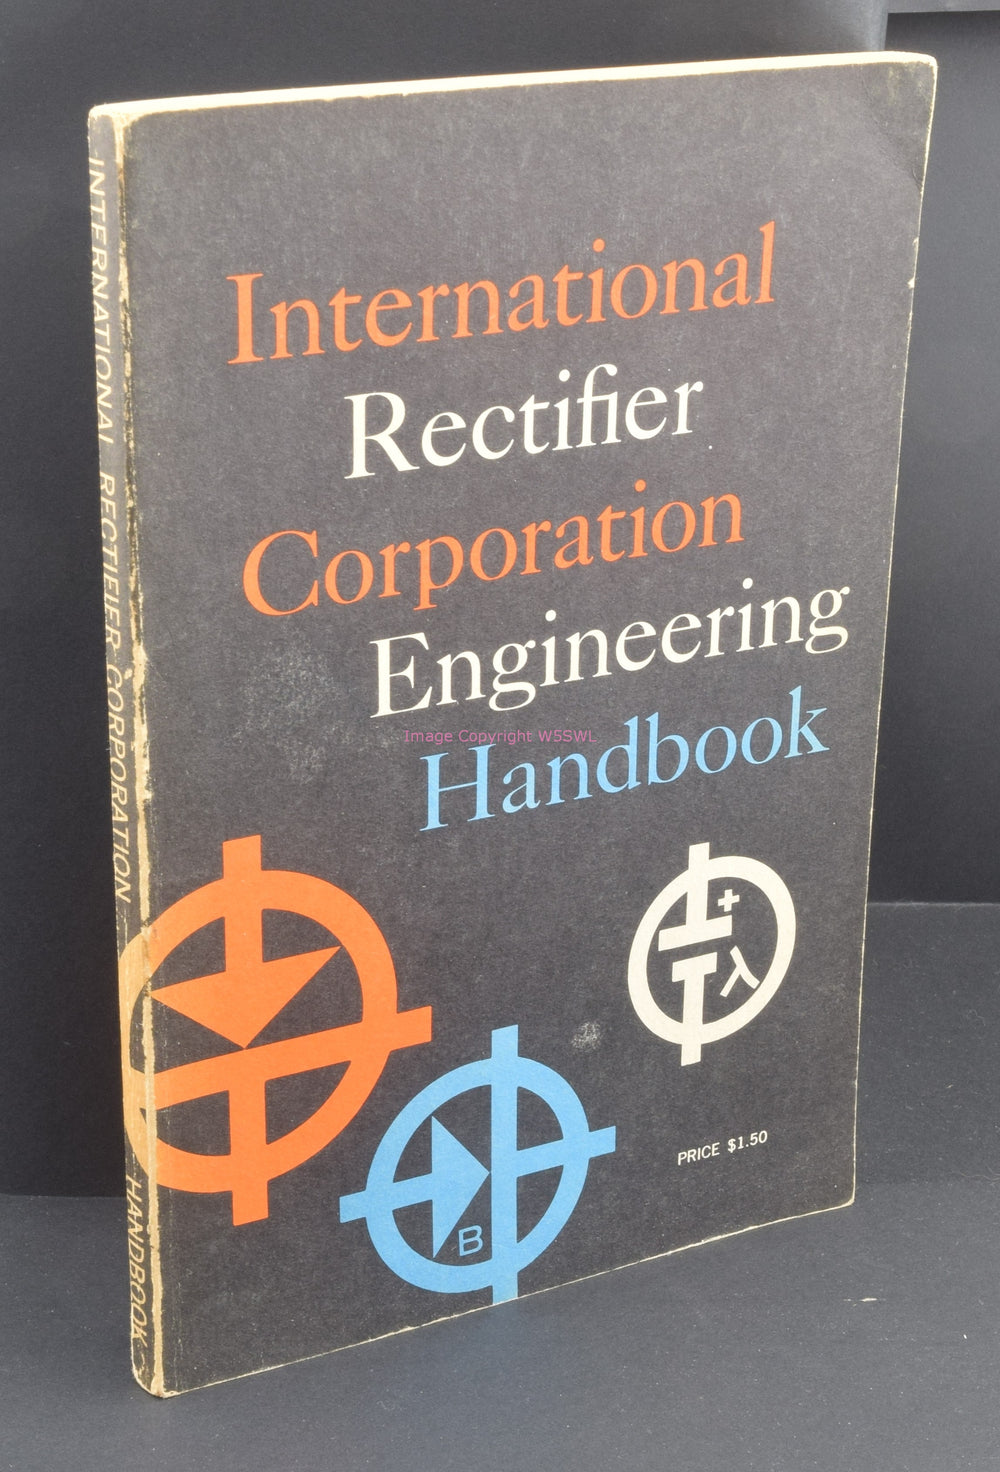 International Rectifier Corporation Engineering Handbook - Dave's Hobby Shop by W5SWL